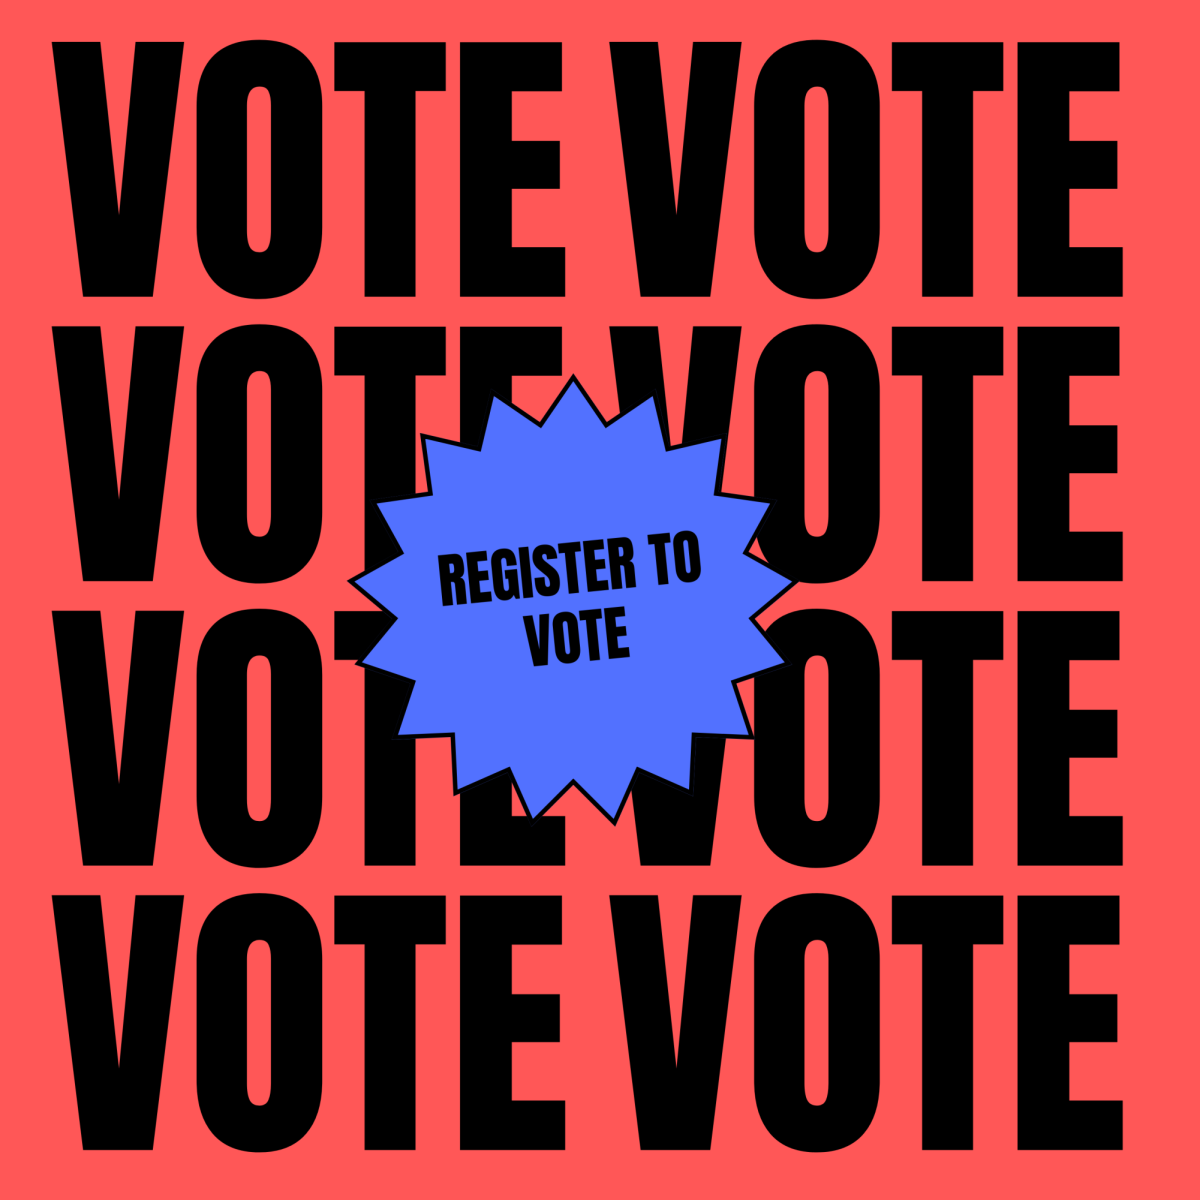 Register to vote by Oct 10.